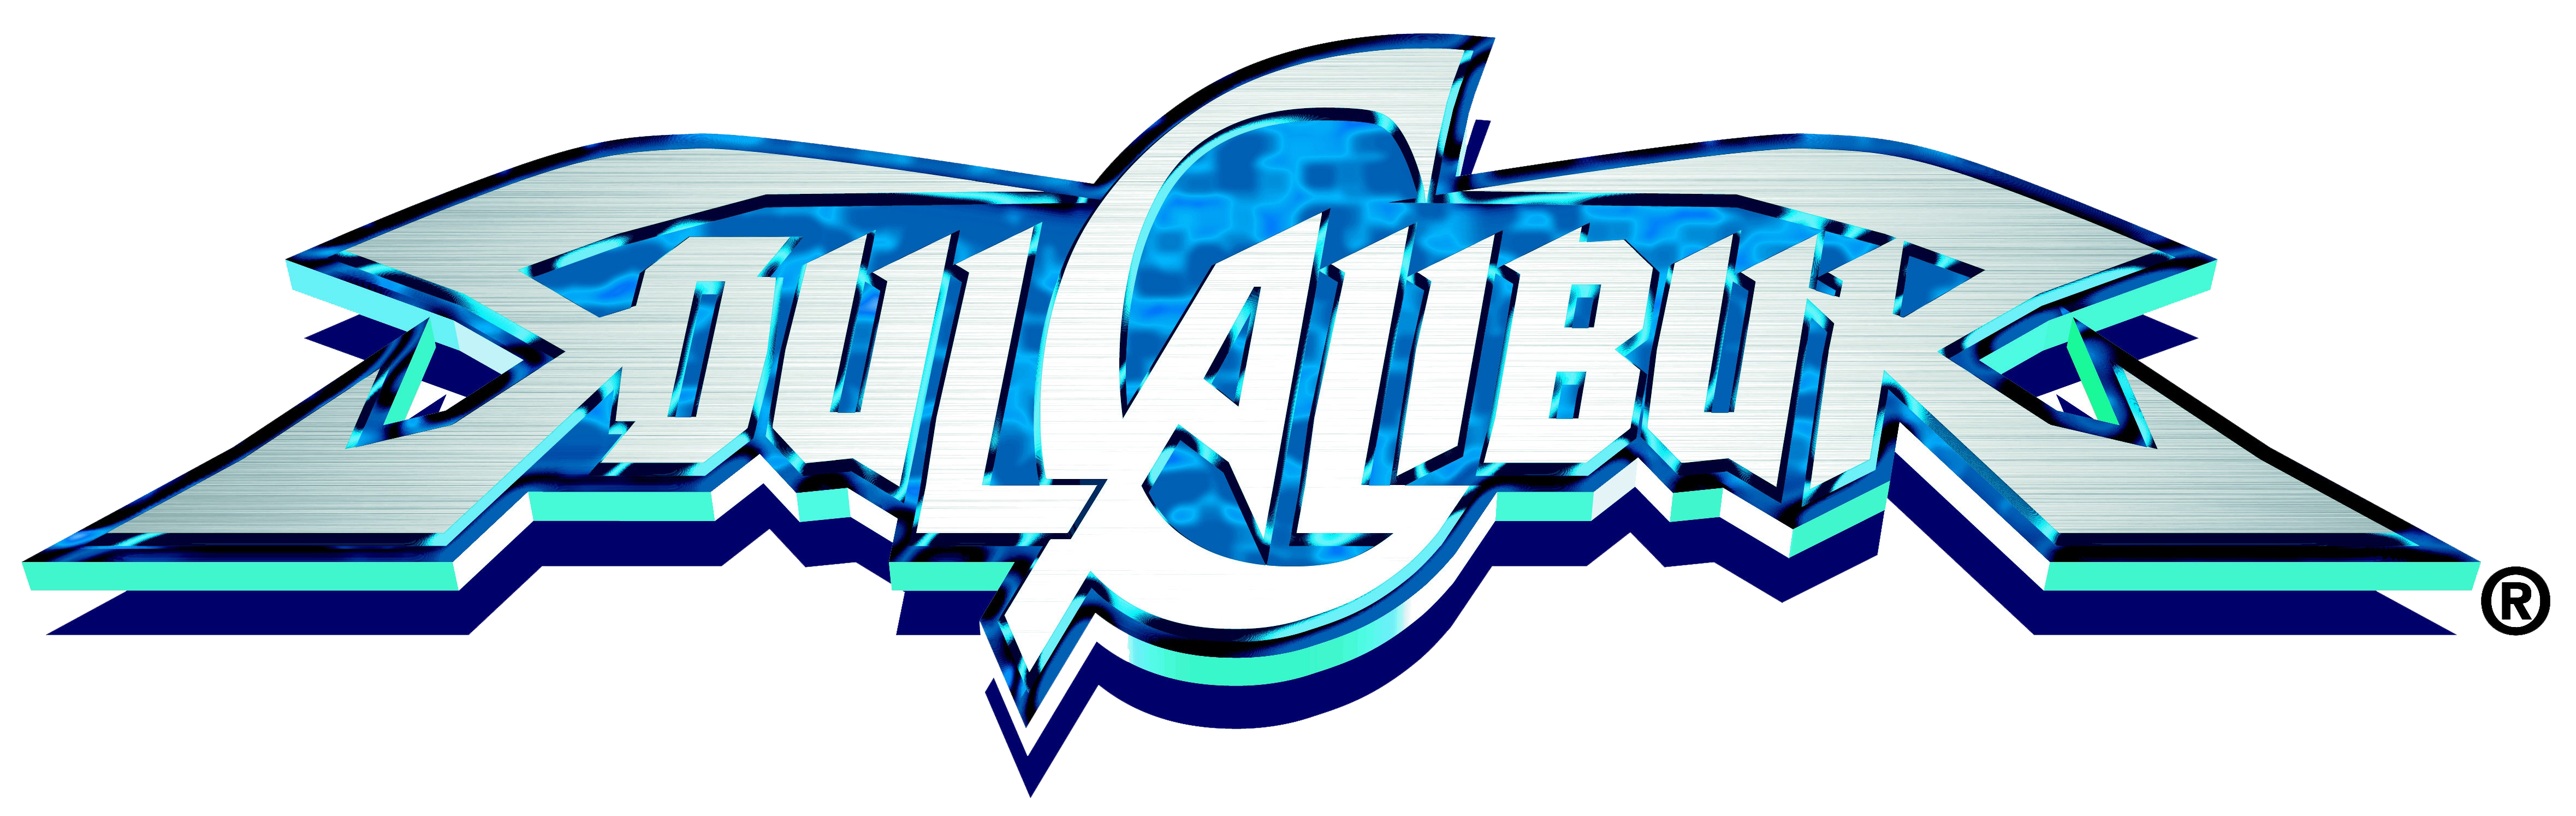 Calibur Logo photo - 1